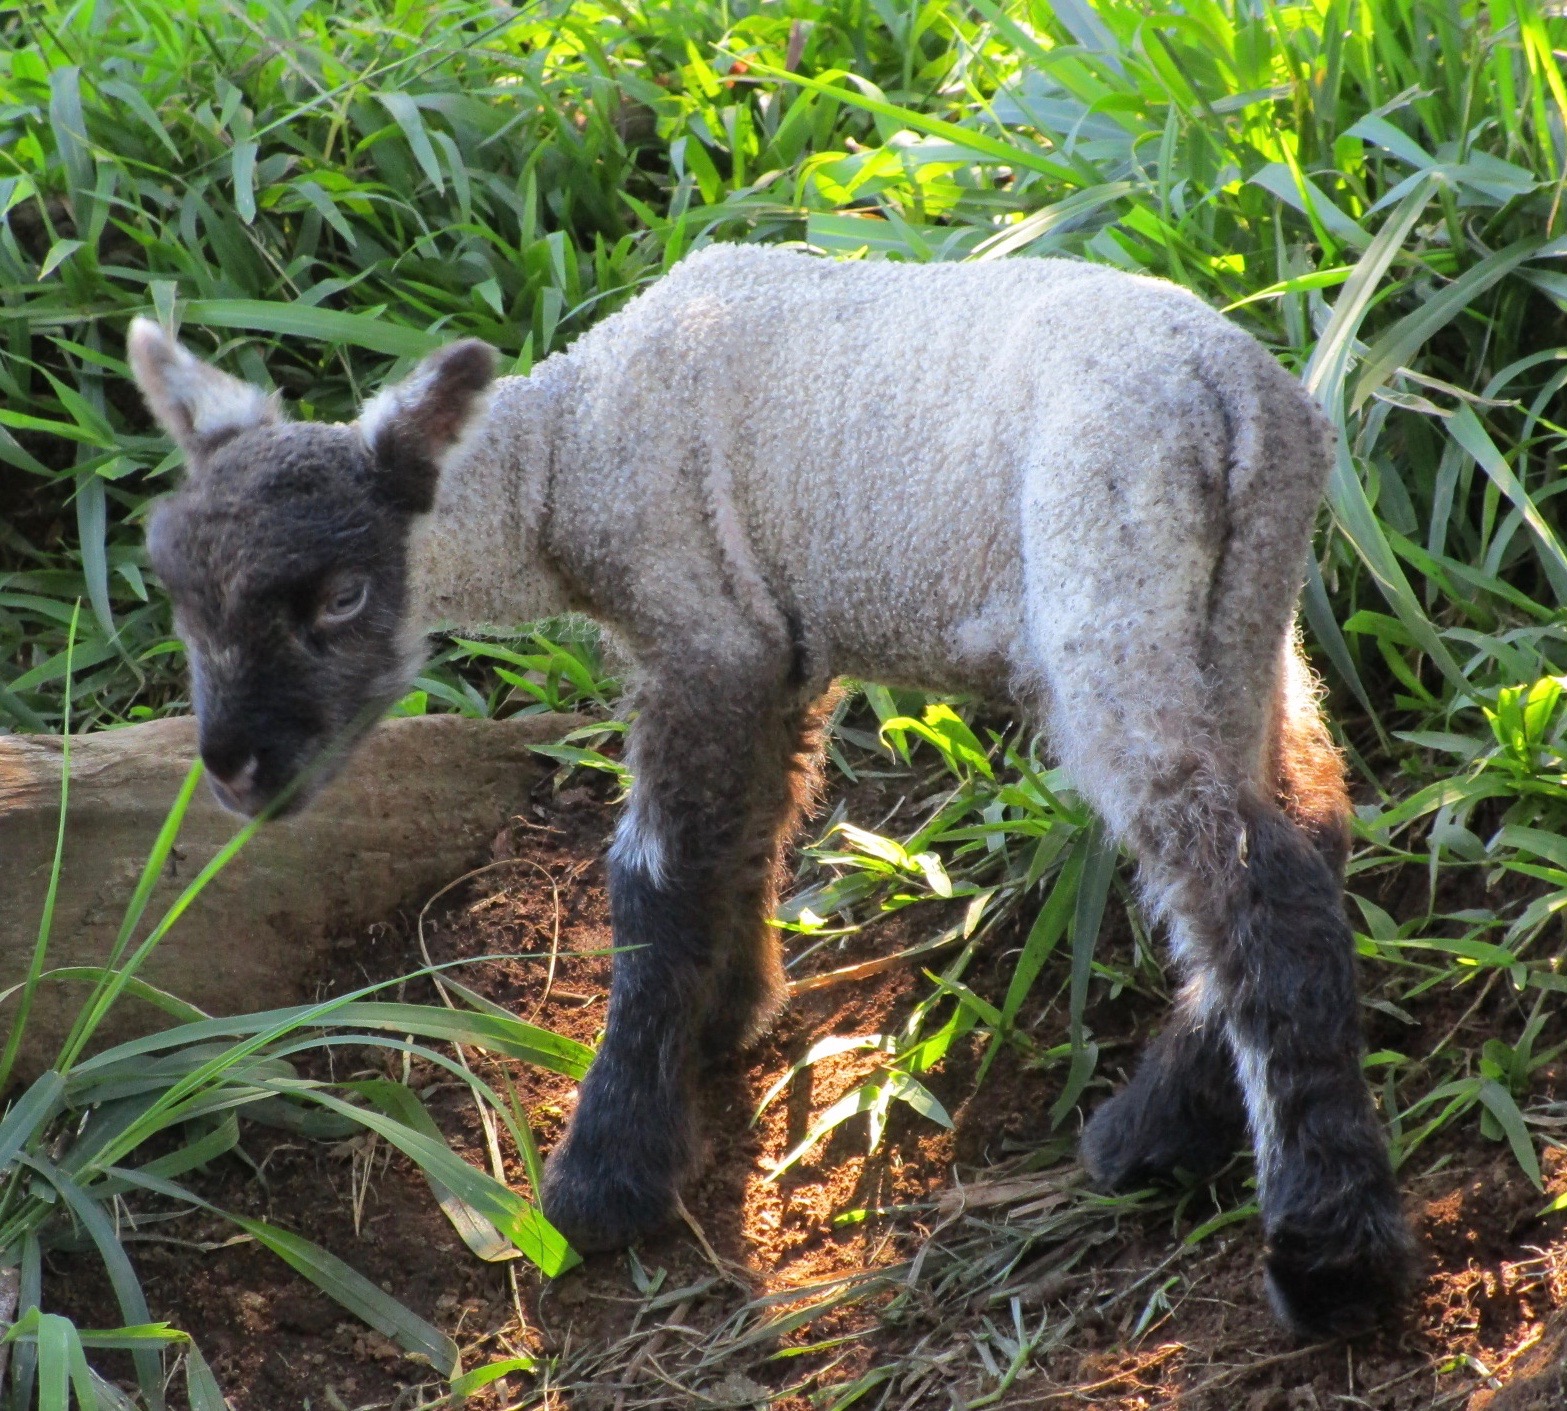 Ram lamb#2 at 2 days old